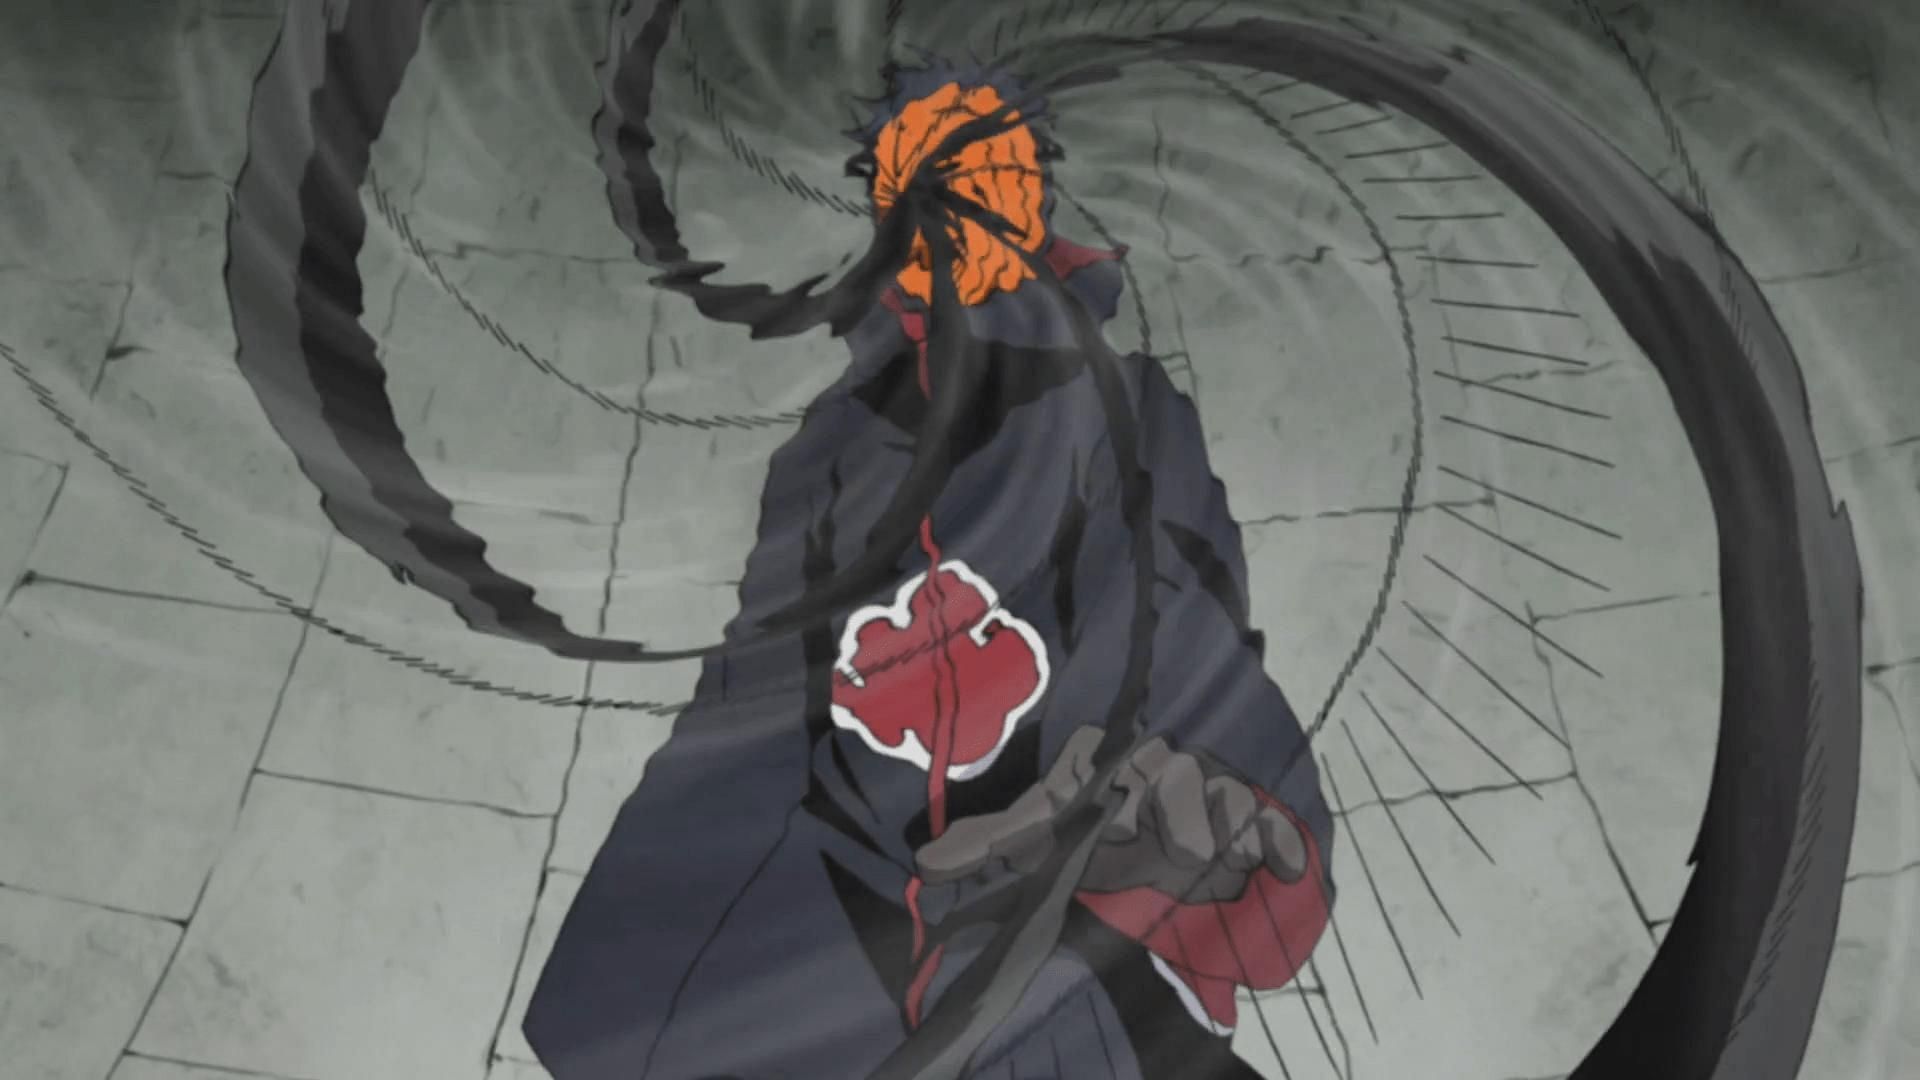 Obito Uchiha using his Kamui in the Naruto anime (Image via Studio Pierrot)